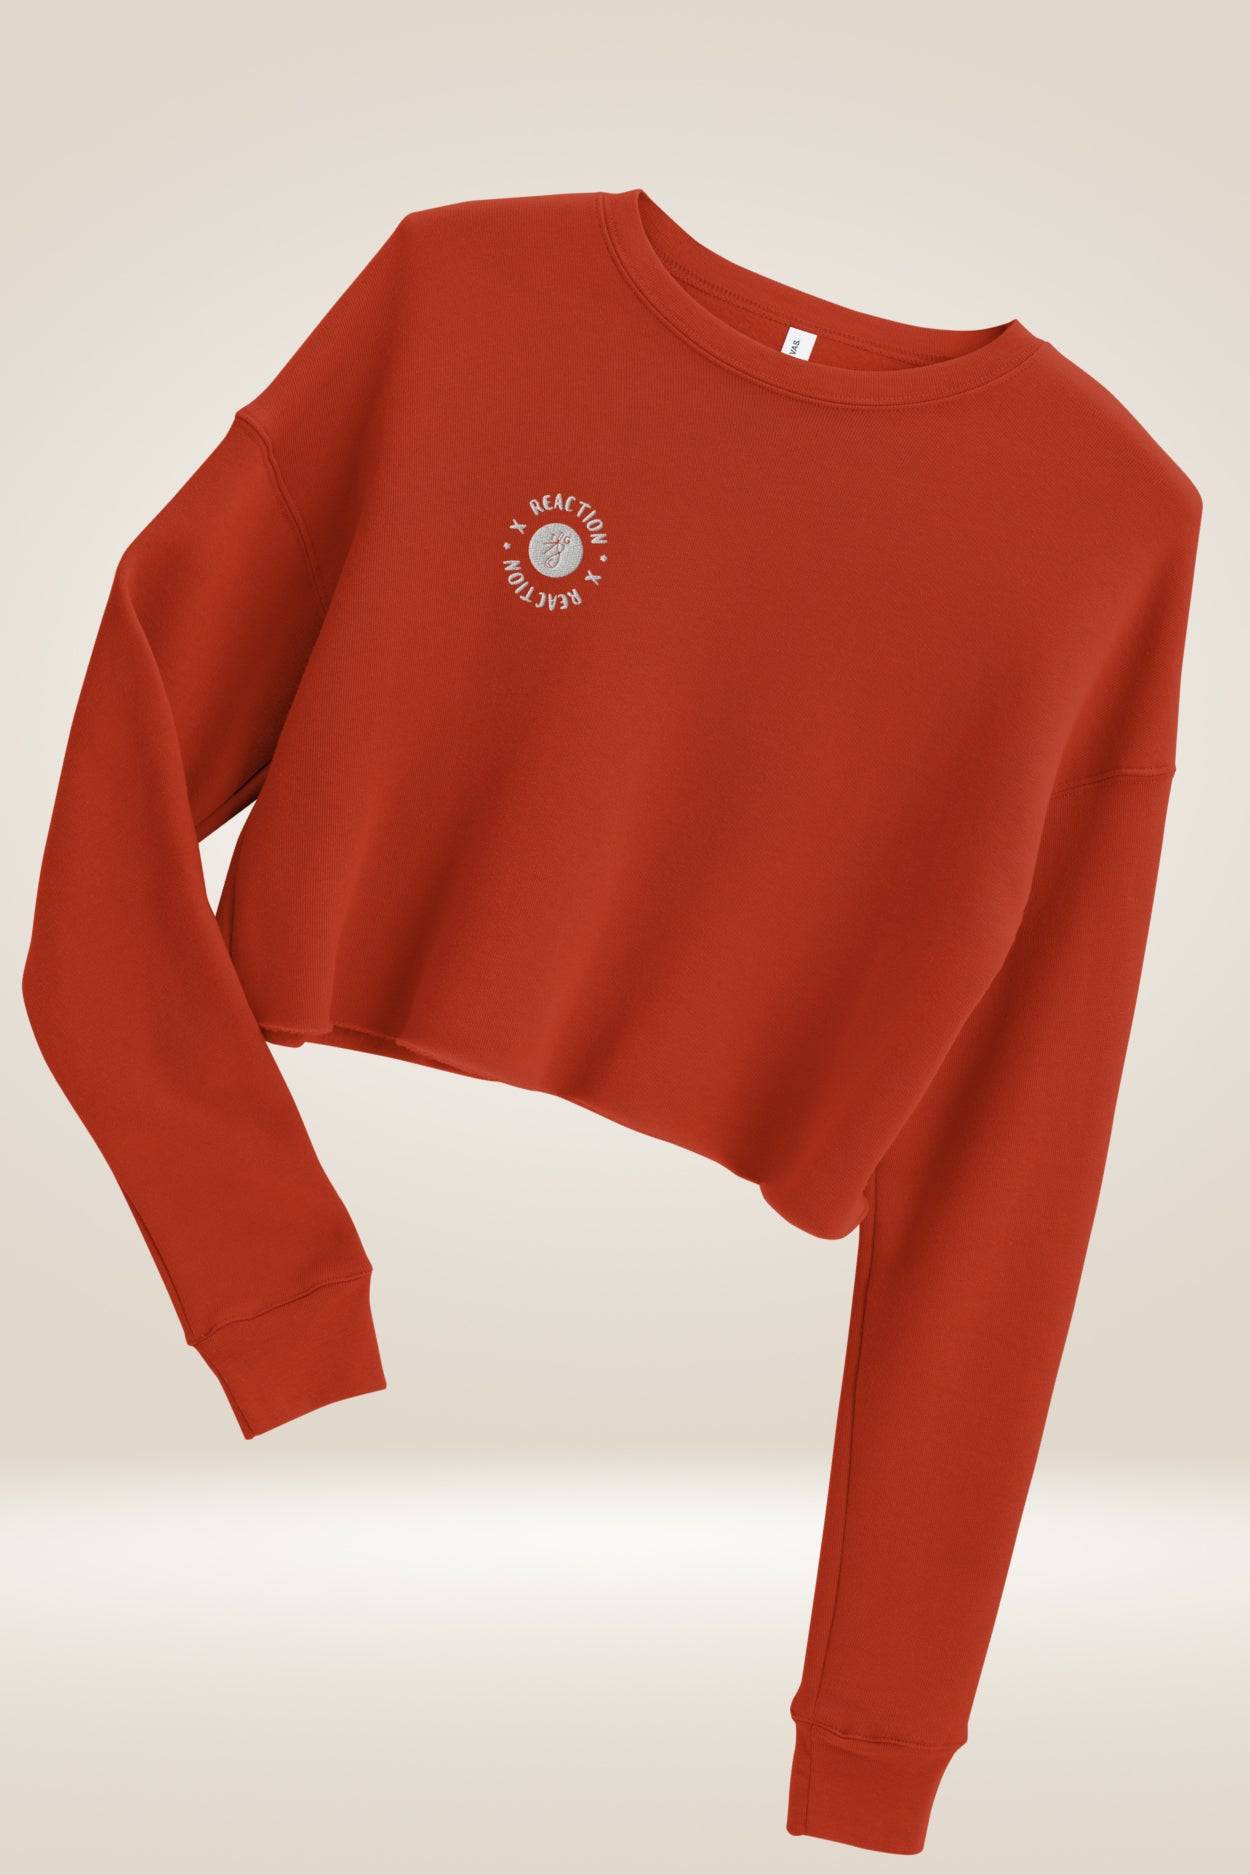 TGC X Reaction Orange Cropped Sweatshirt - TGC Boutique - Cropped Sweatshirt